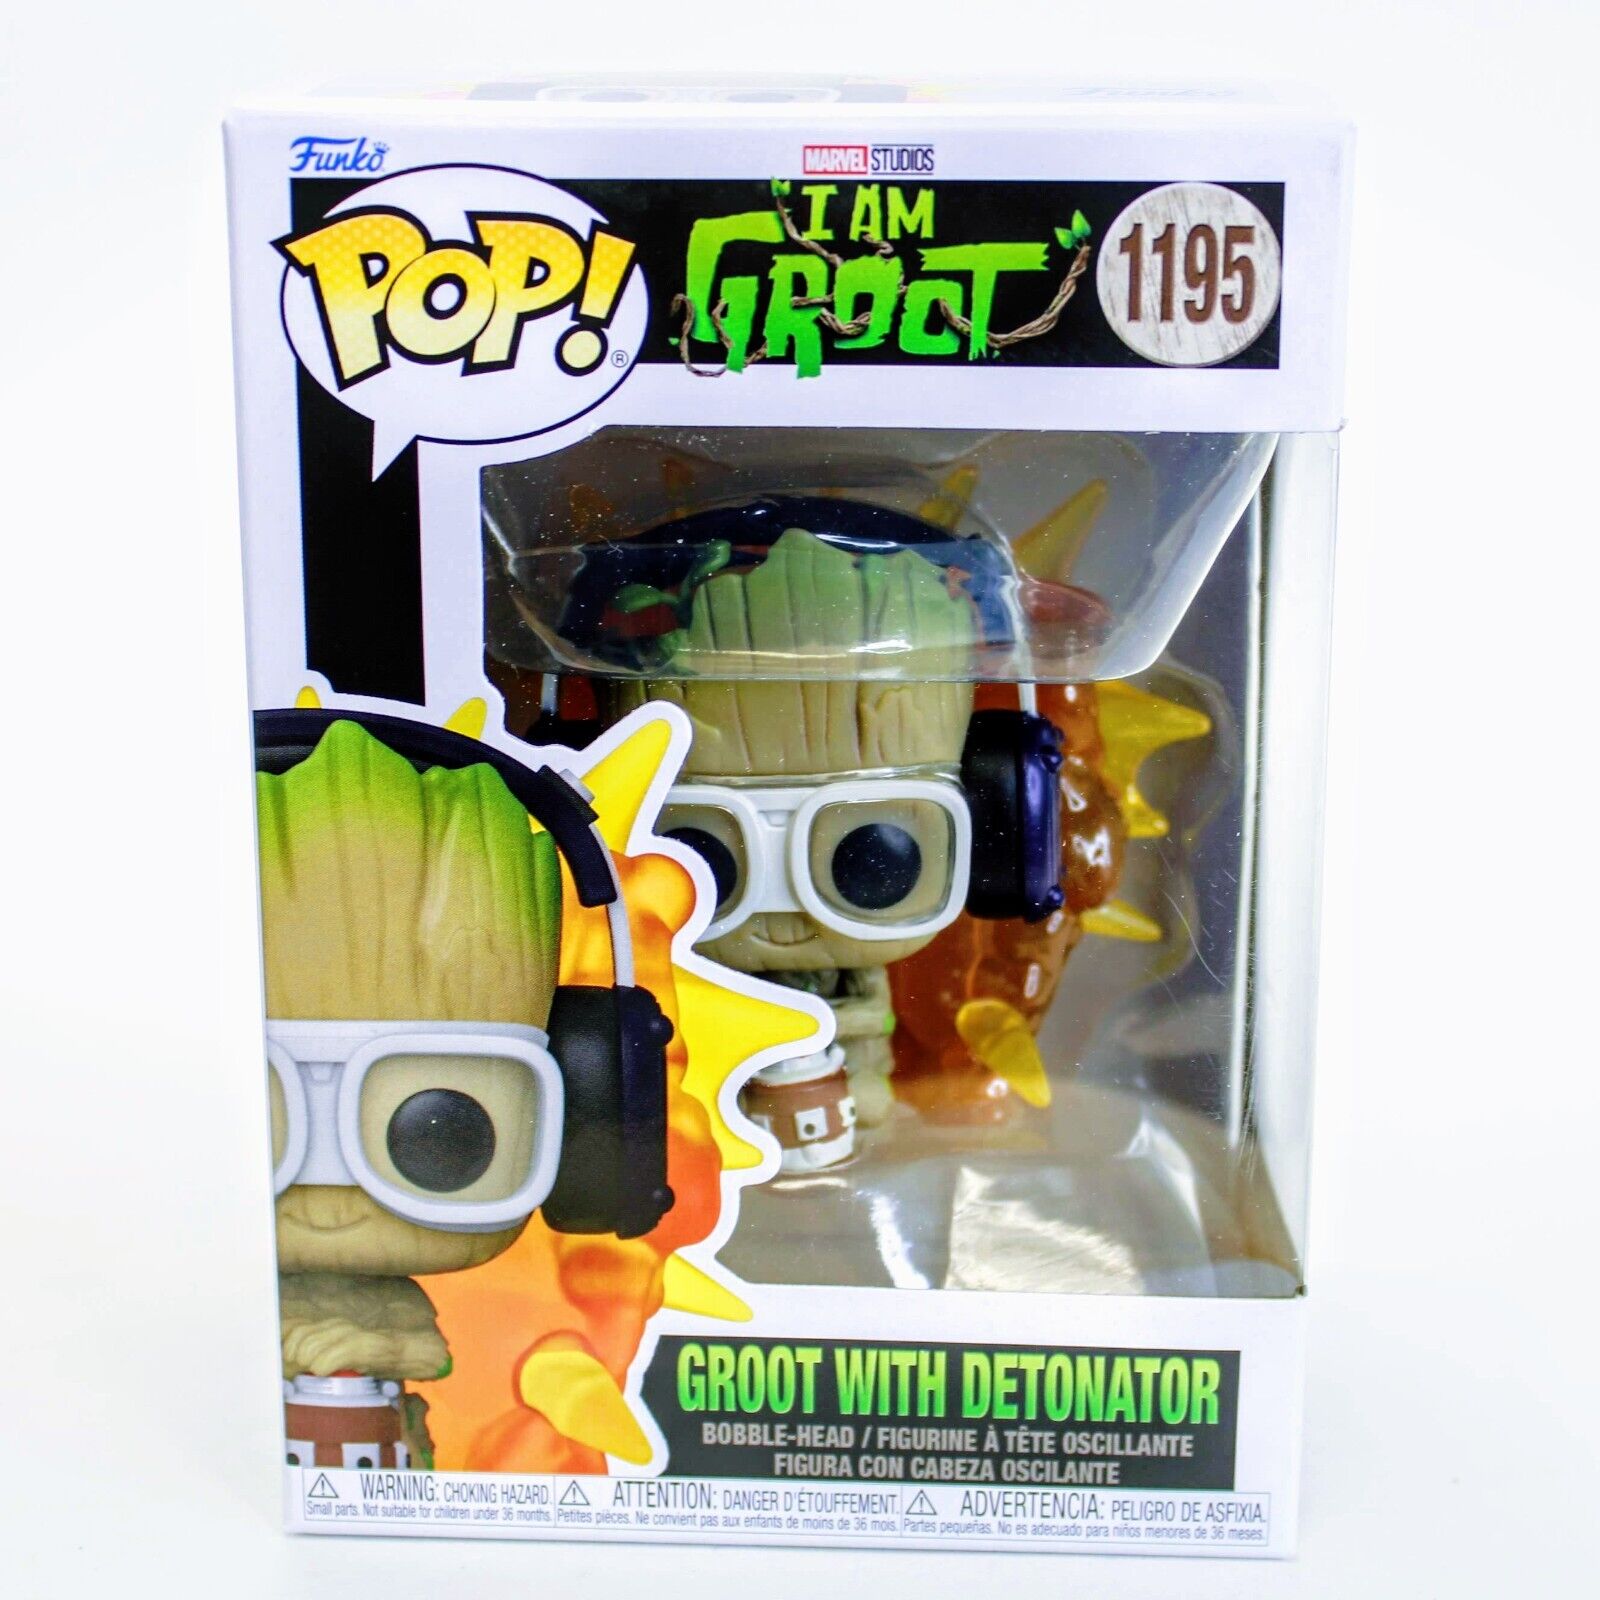 Funko Pop! Marvel Groot with Detonator - I AM GROOT Series Figure #1195